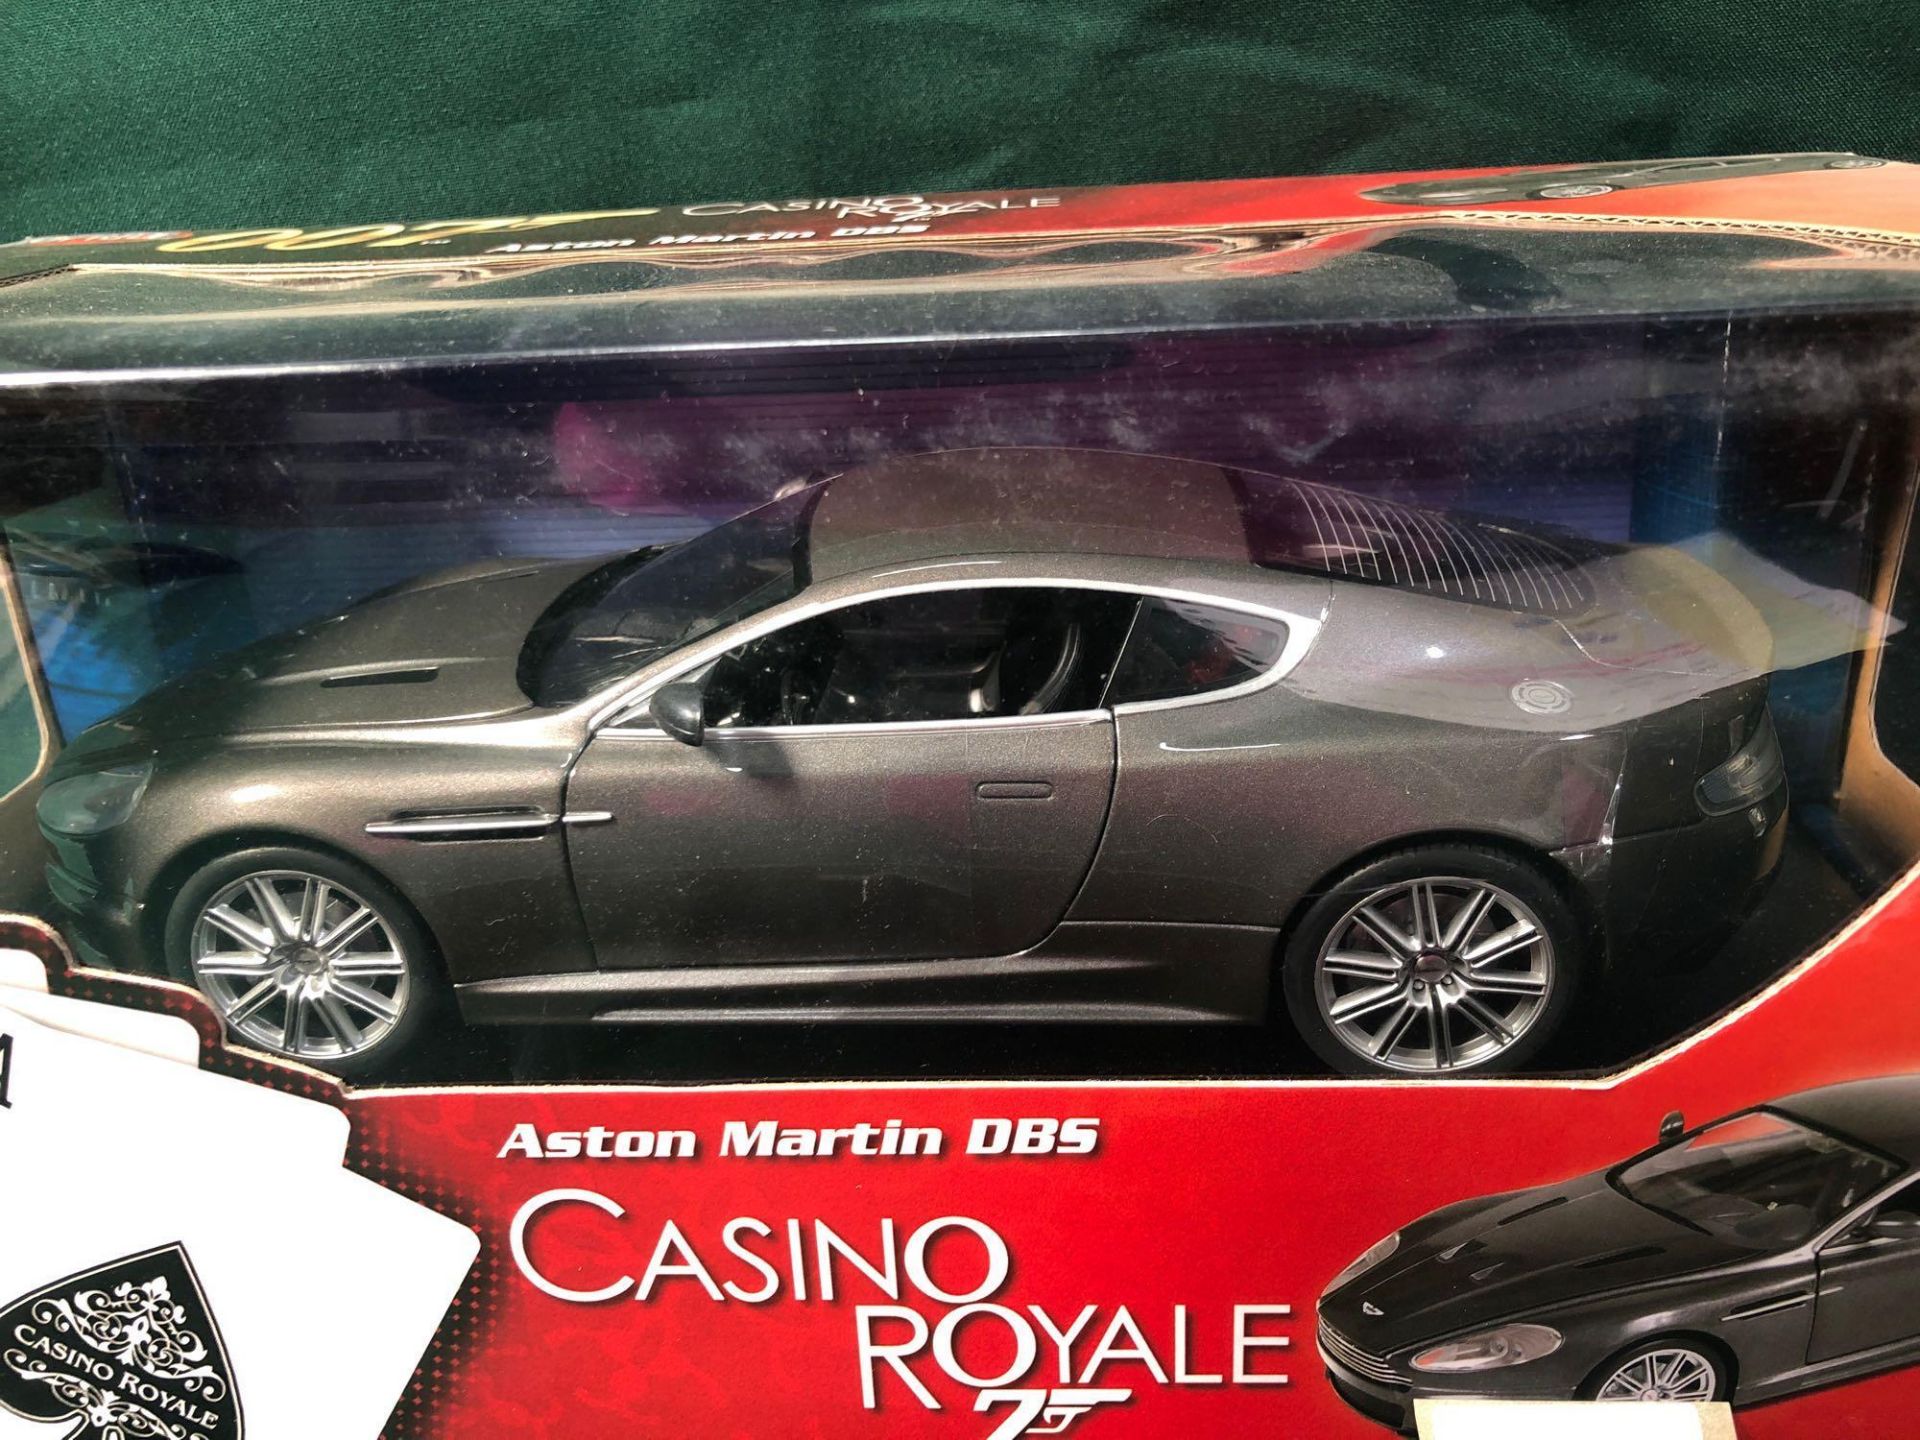 Joyride Model Car #33858 Aston Martin DBS Casino Royale James Bond 007 - Image 2 of 2